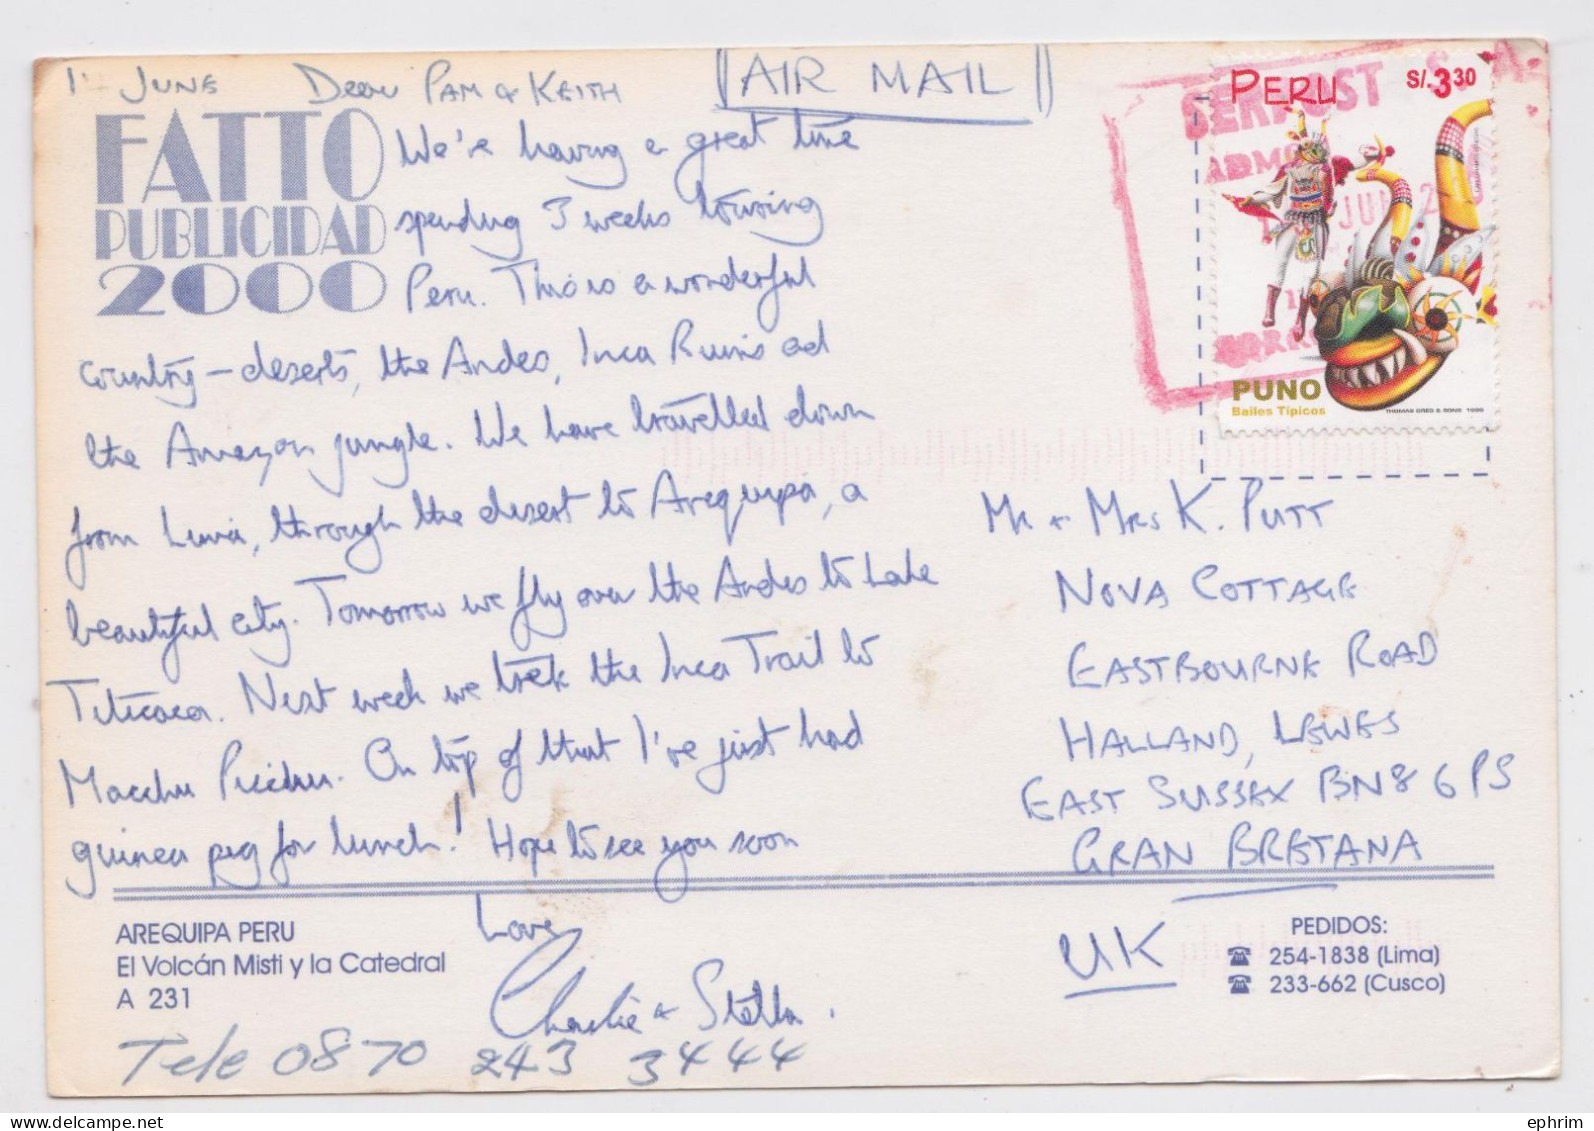 Pérou Peru Carte Postale Timbre Sello Bailes Tipicos Stamp Air Mail Postcard 2000 - Perù